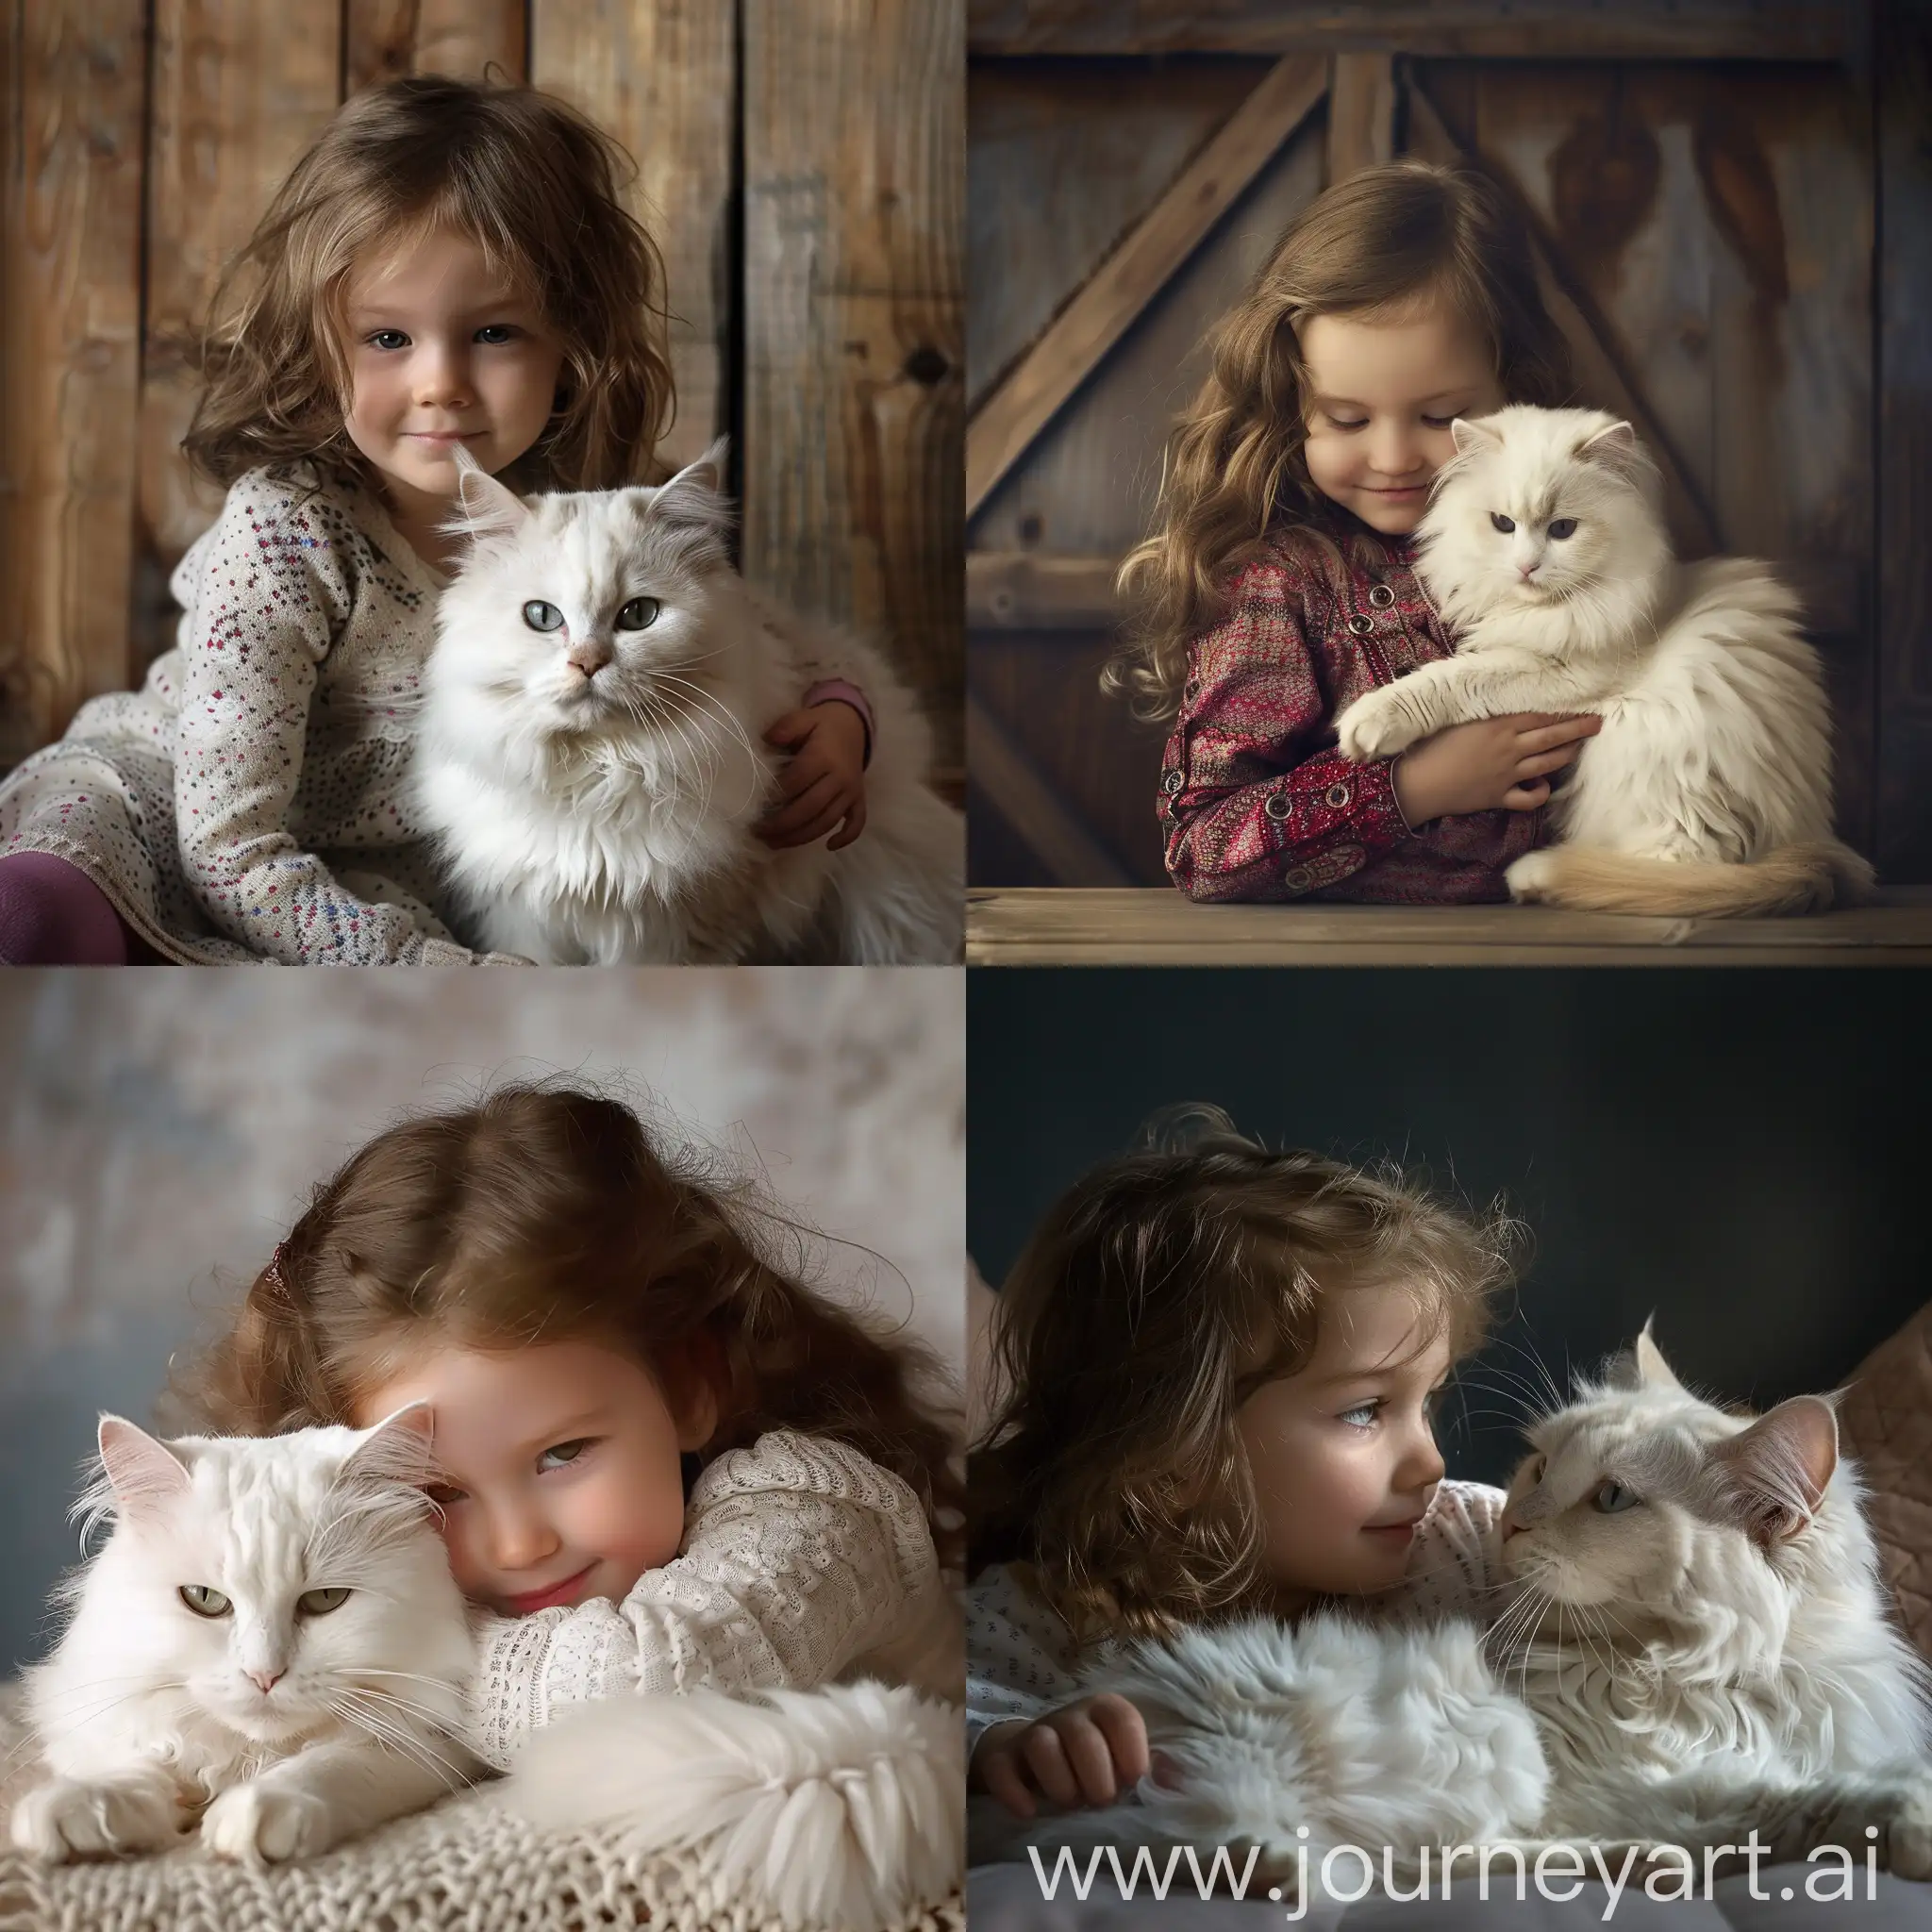 Adorable-Little-Girl-with-White-Cat-Heartwarming-Portrait-of-Childhood-Joy